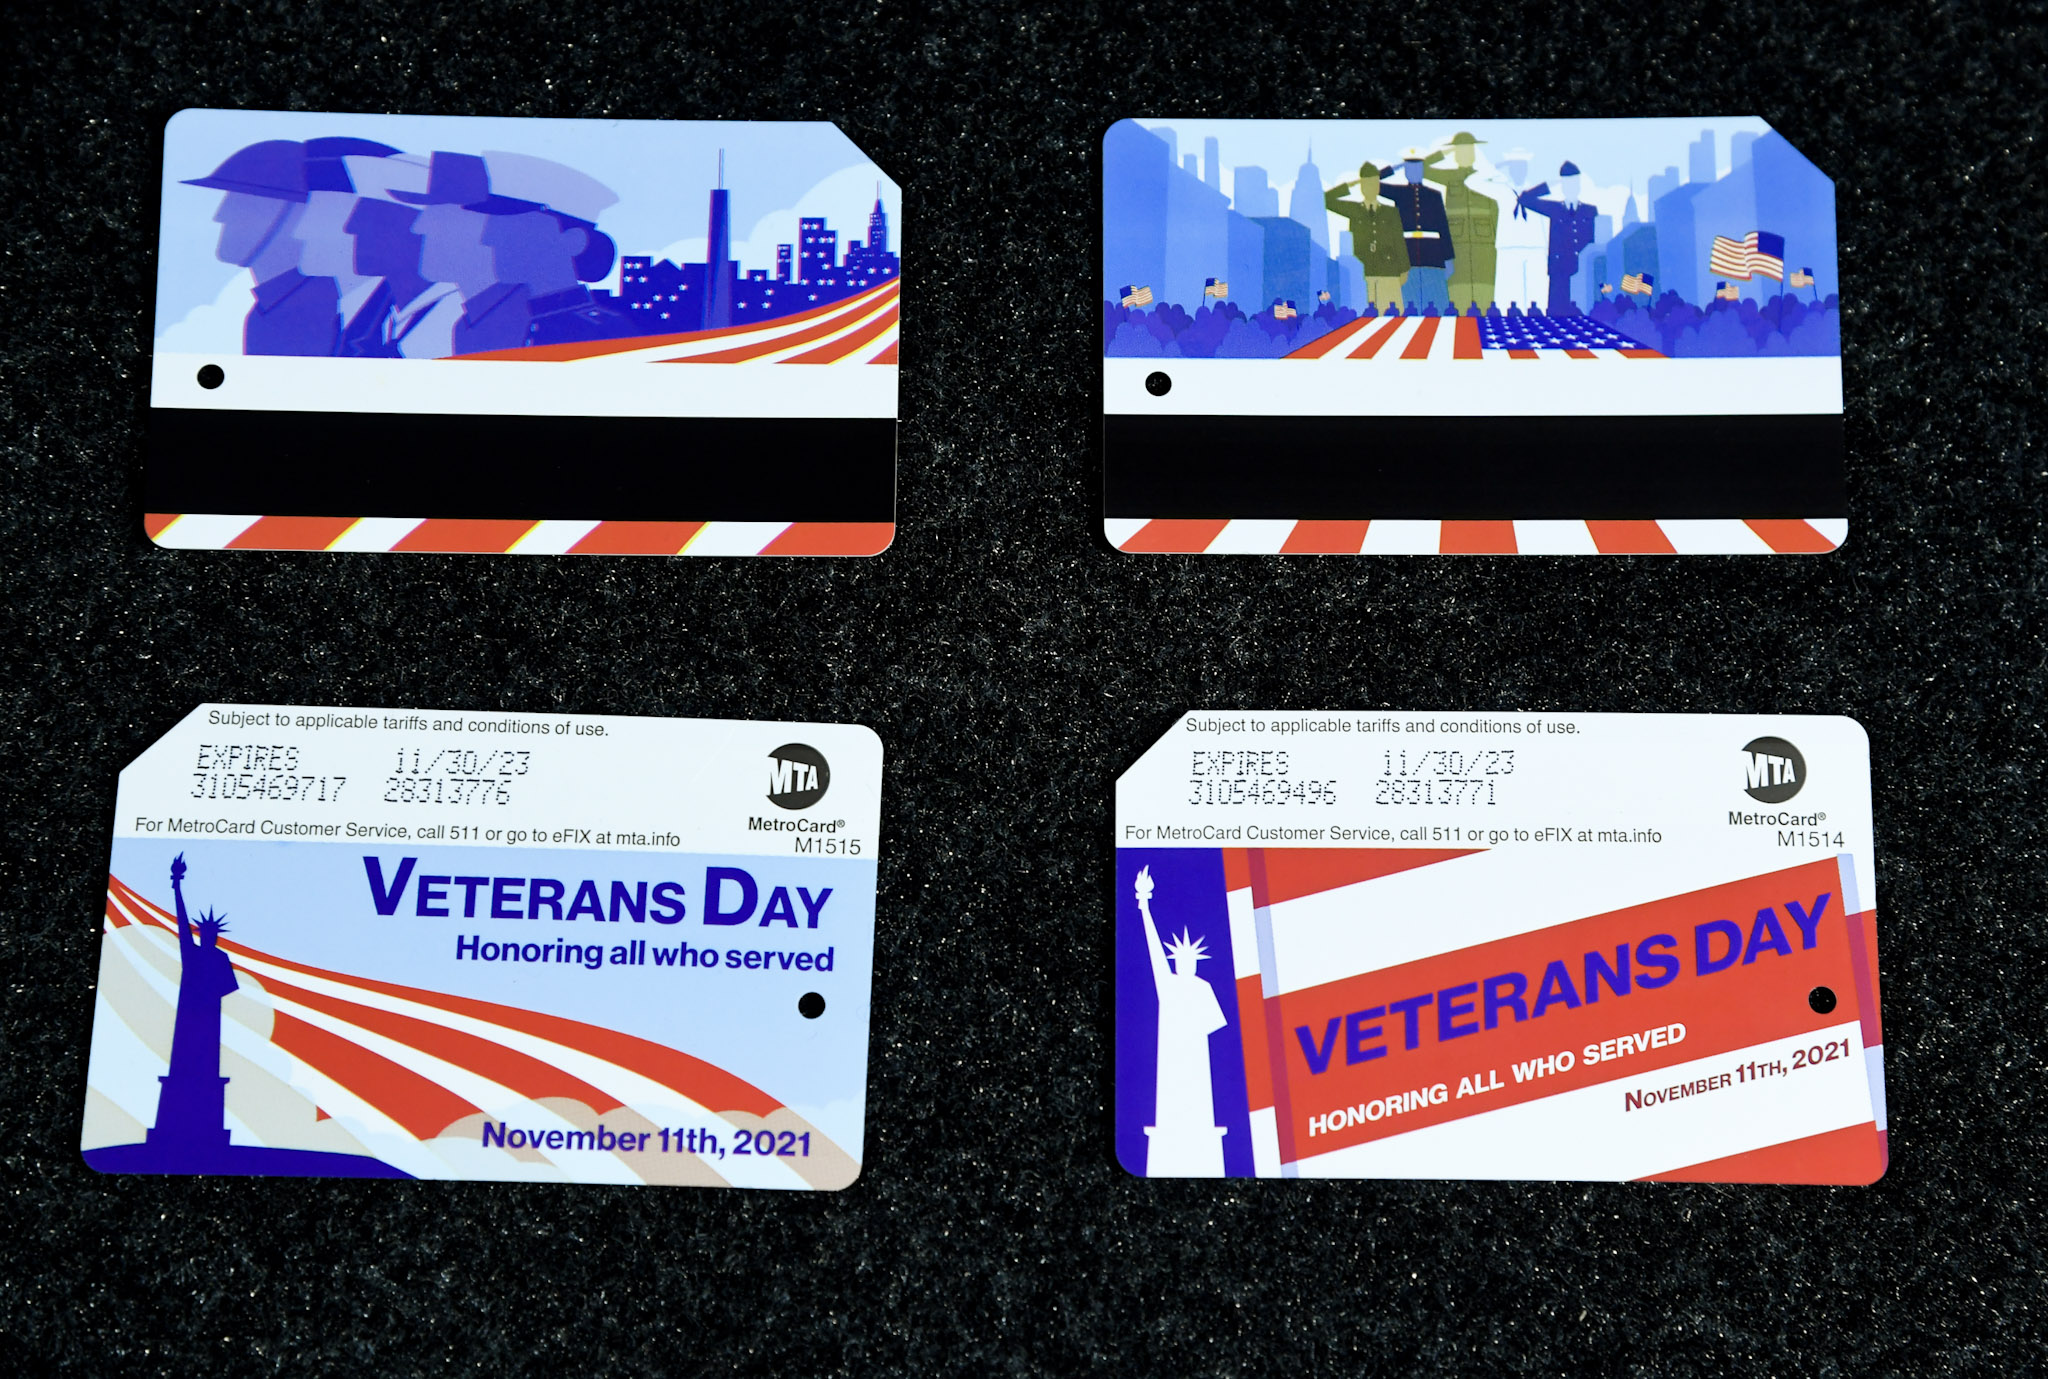 MTA Announces Availability of Commemorative MetroCards Honoring Veterans